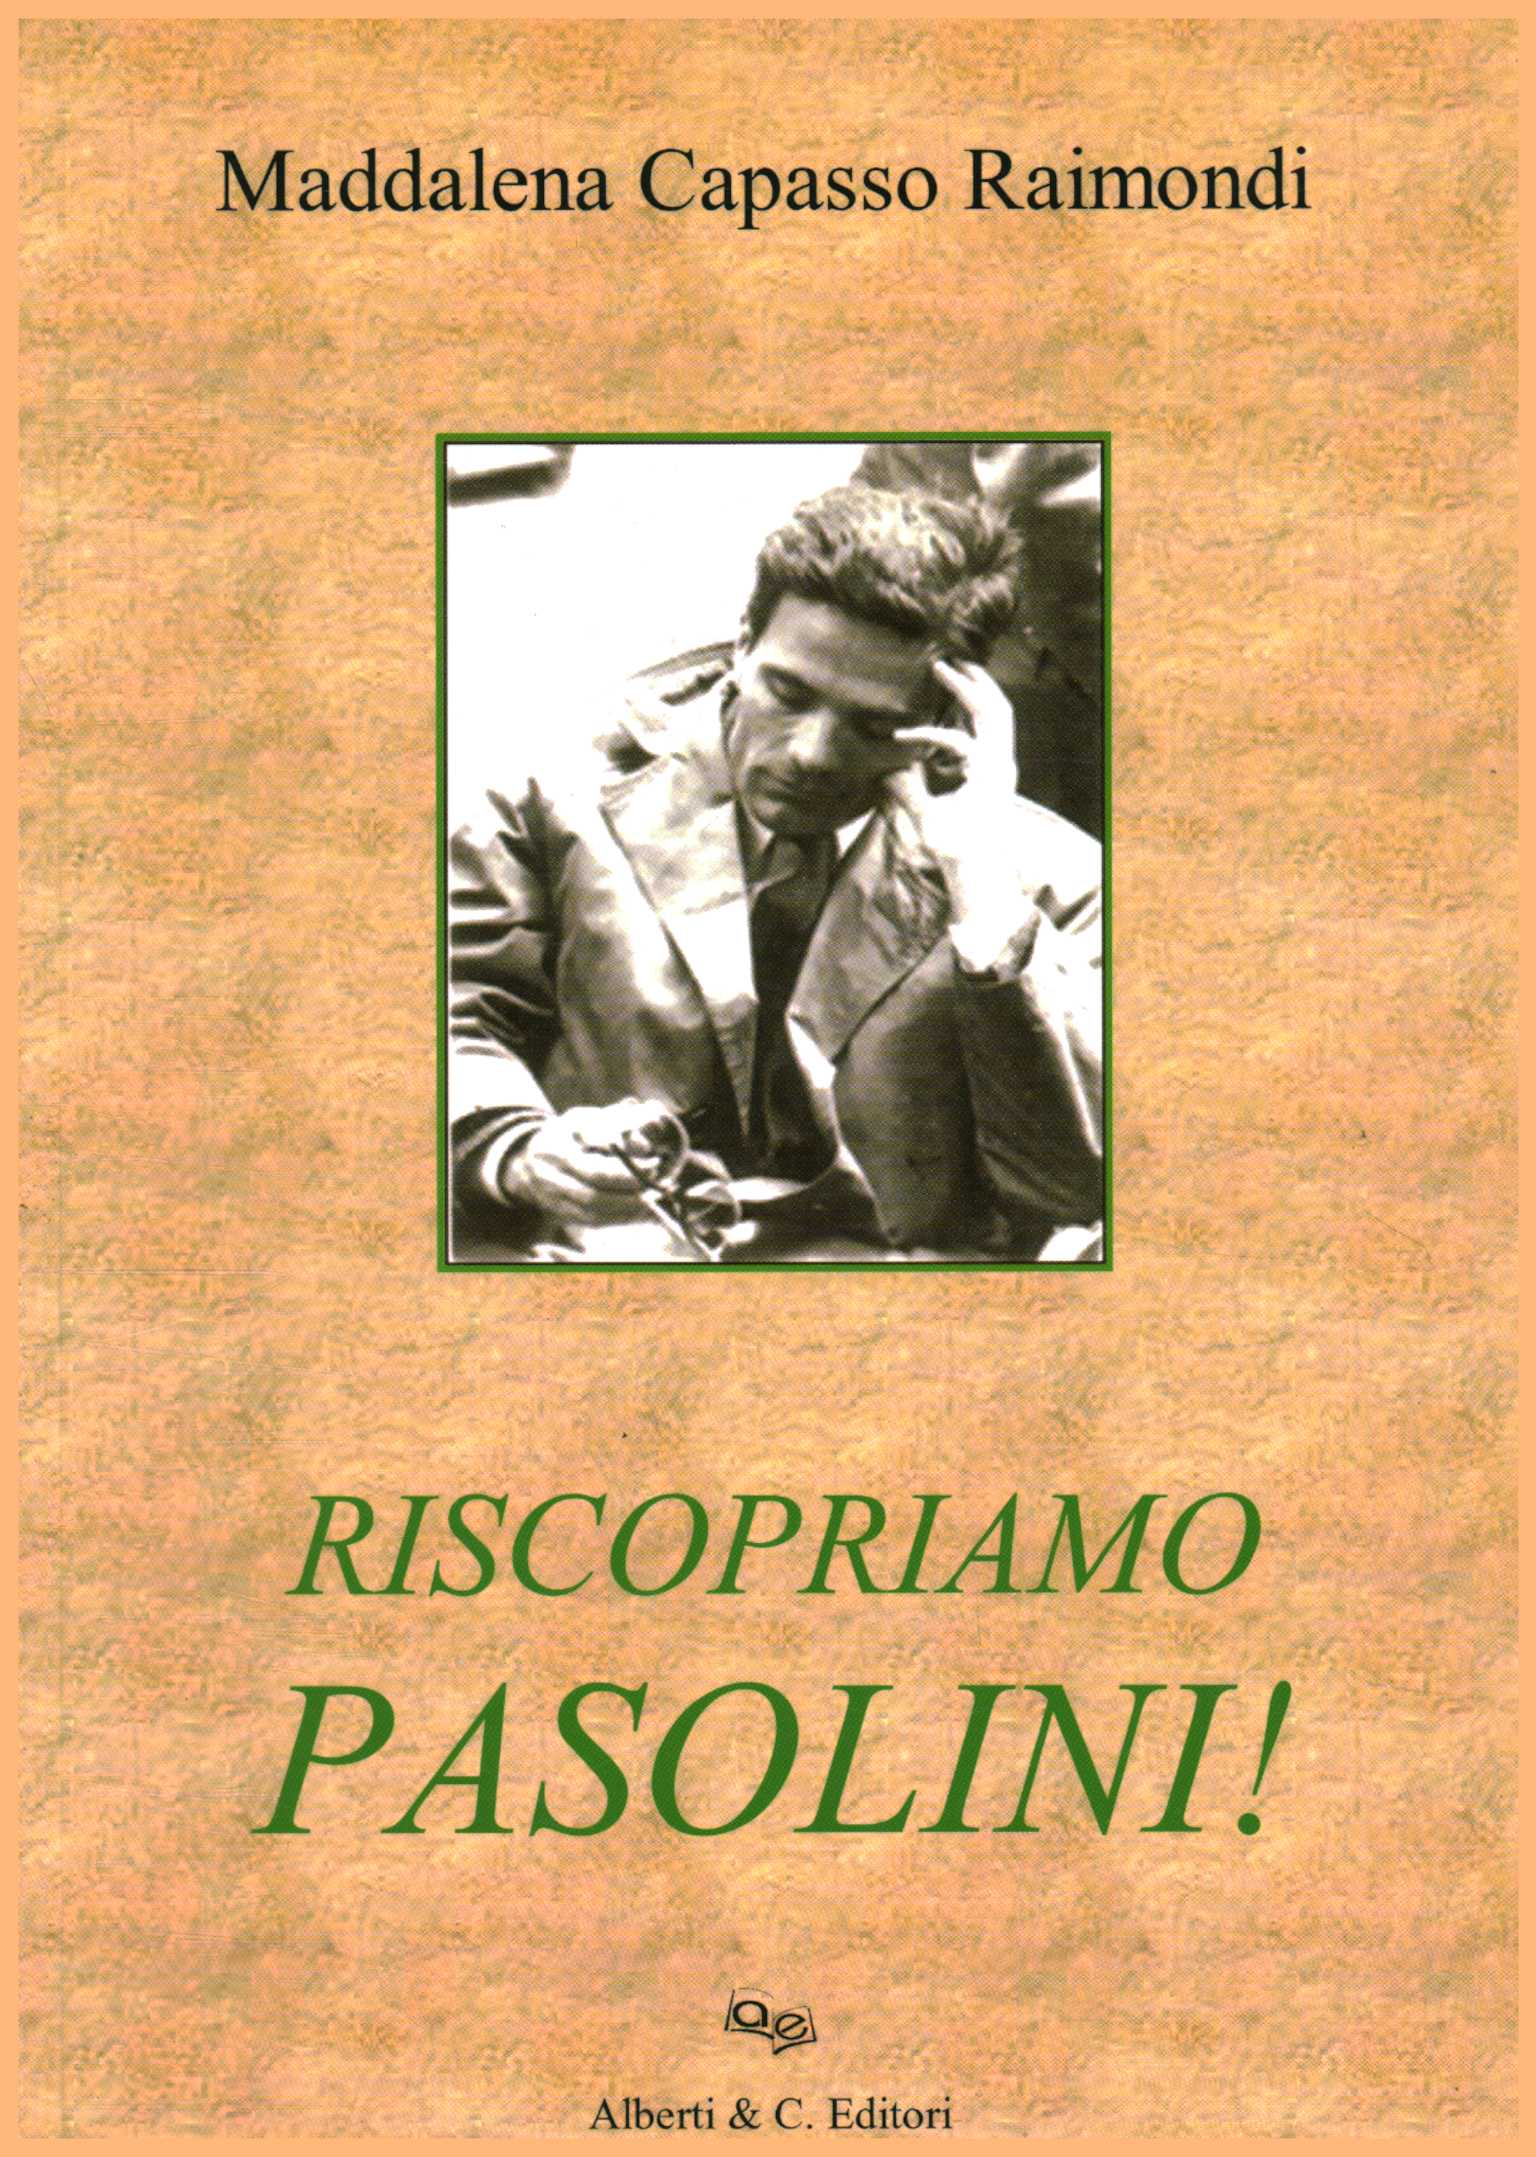 Let's rediscover Pasolini!